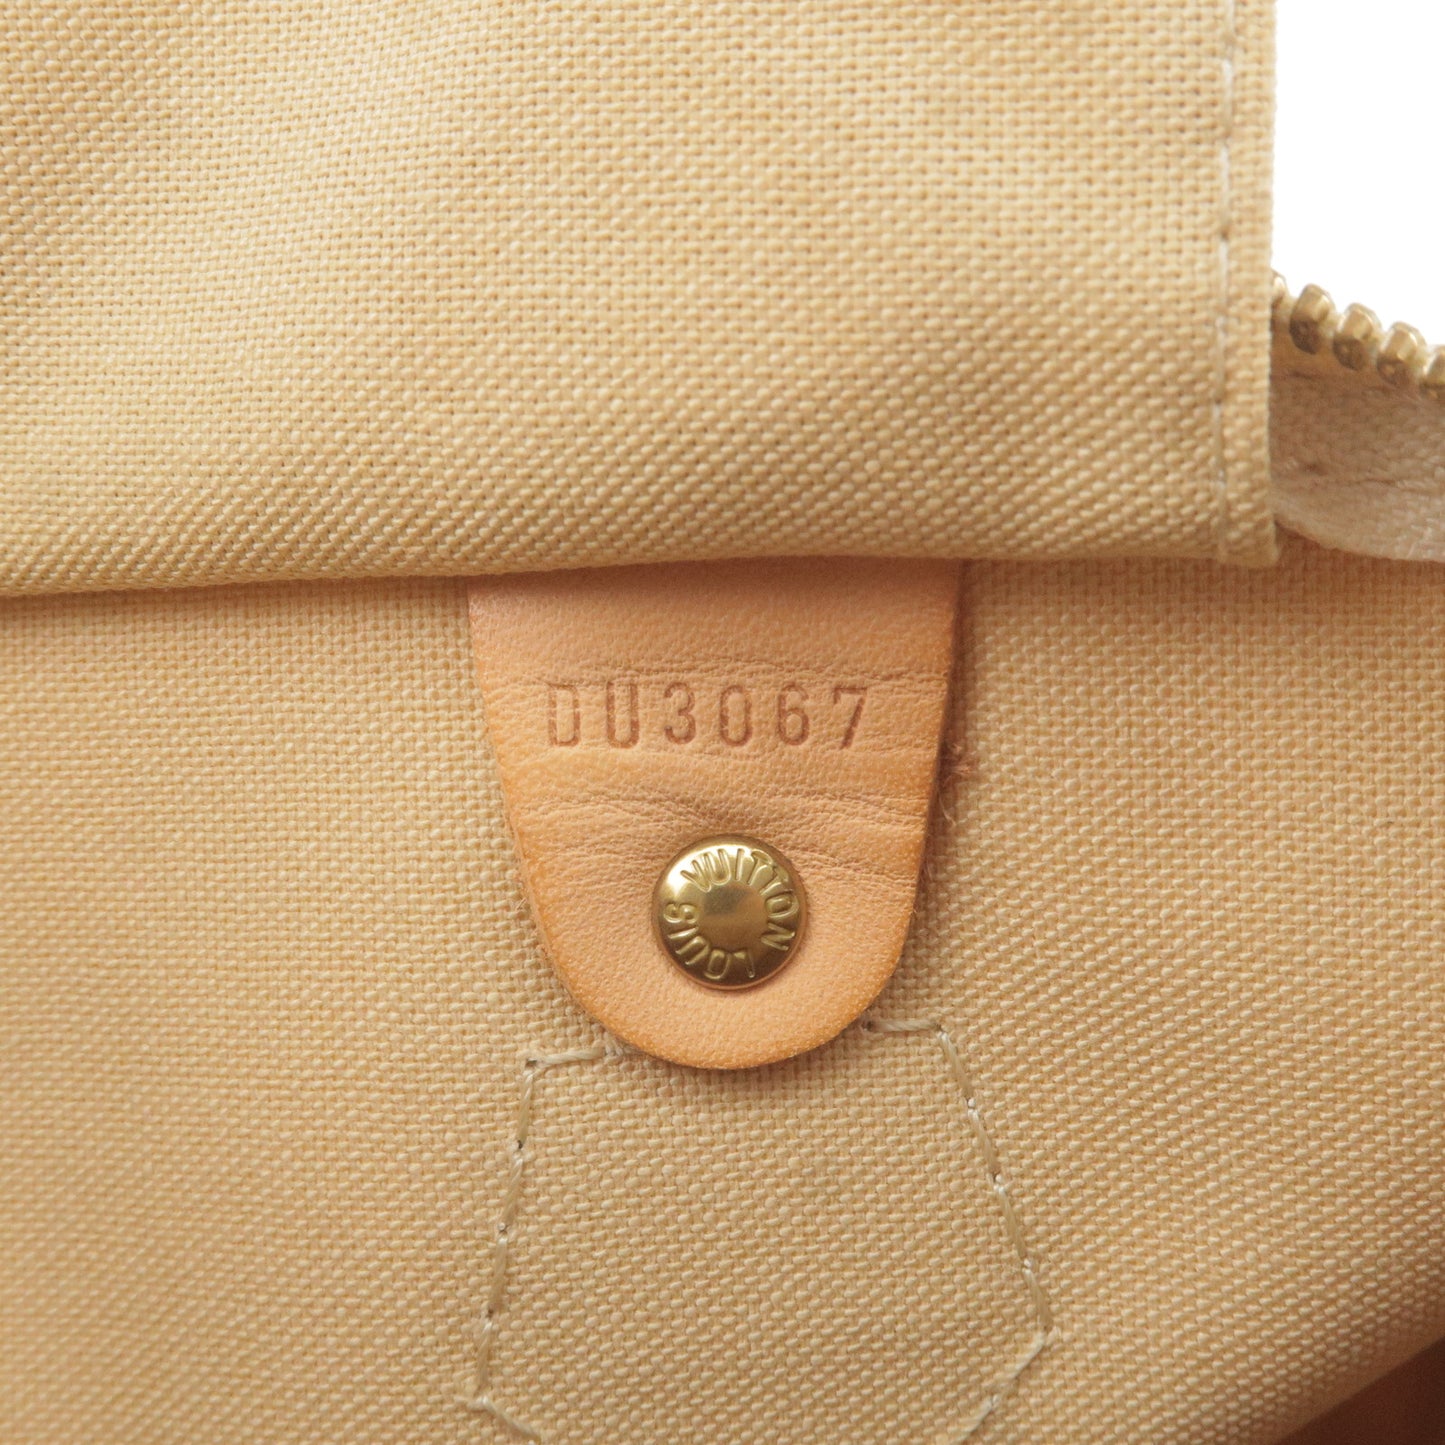 Louis Vuitton Damier Azur Speedy 30 Boston Bag N41533